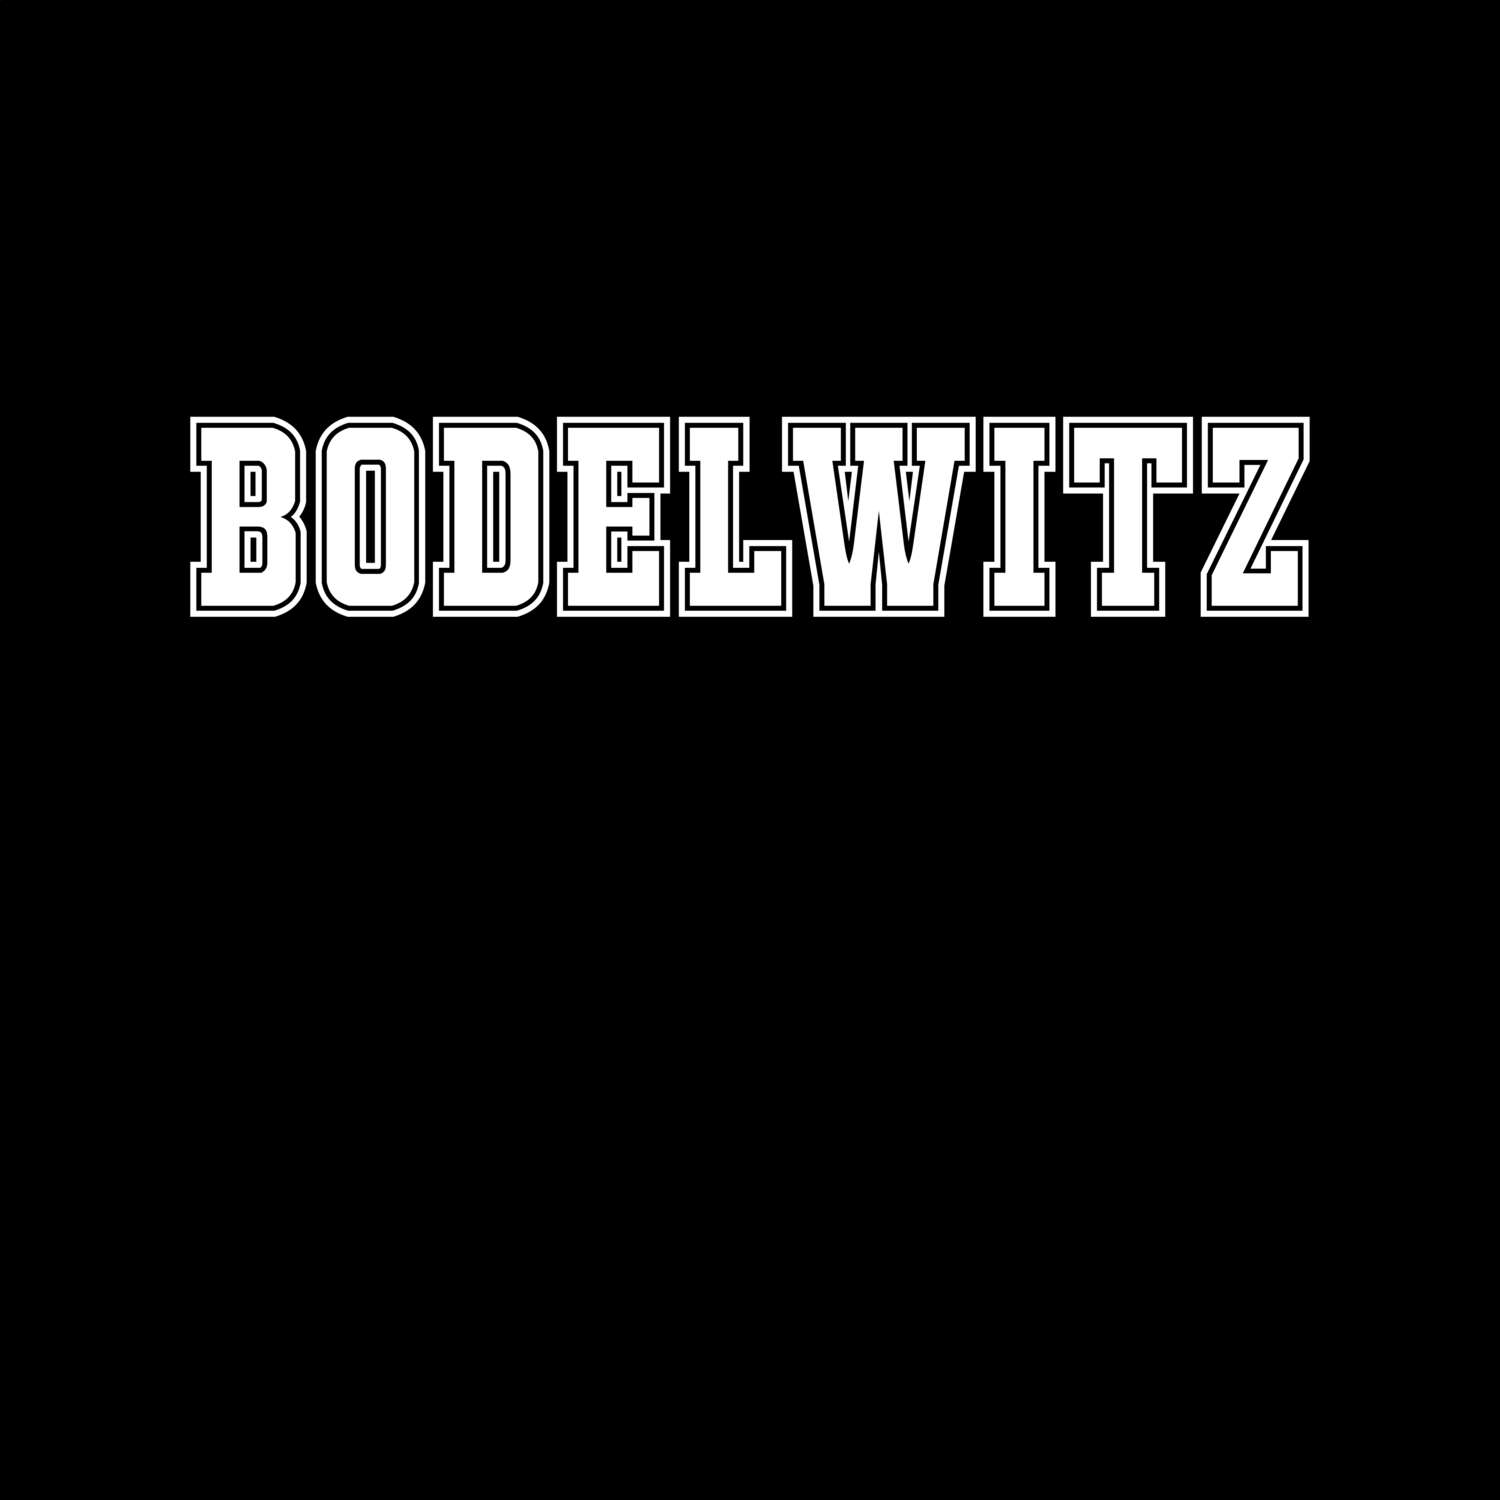 Bodelwitz T-Shirt »Classic«